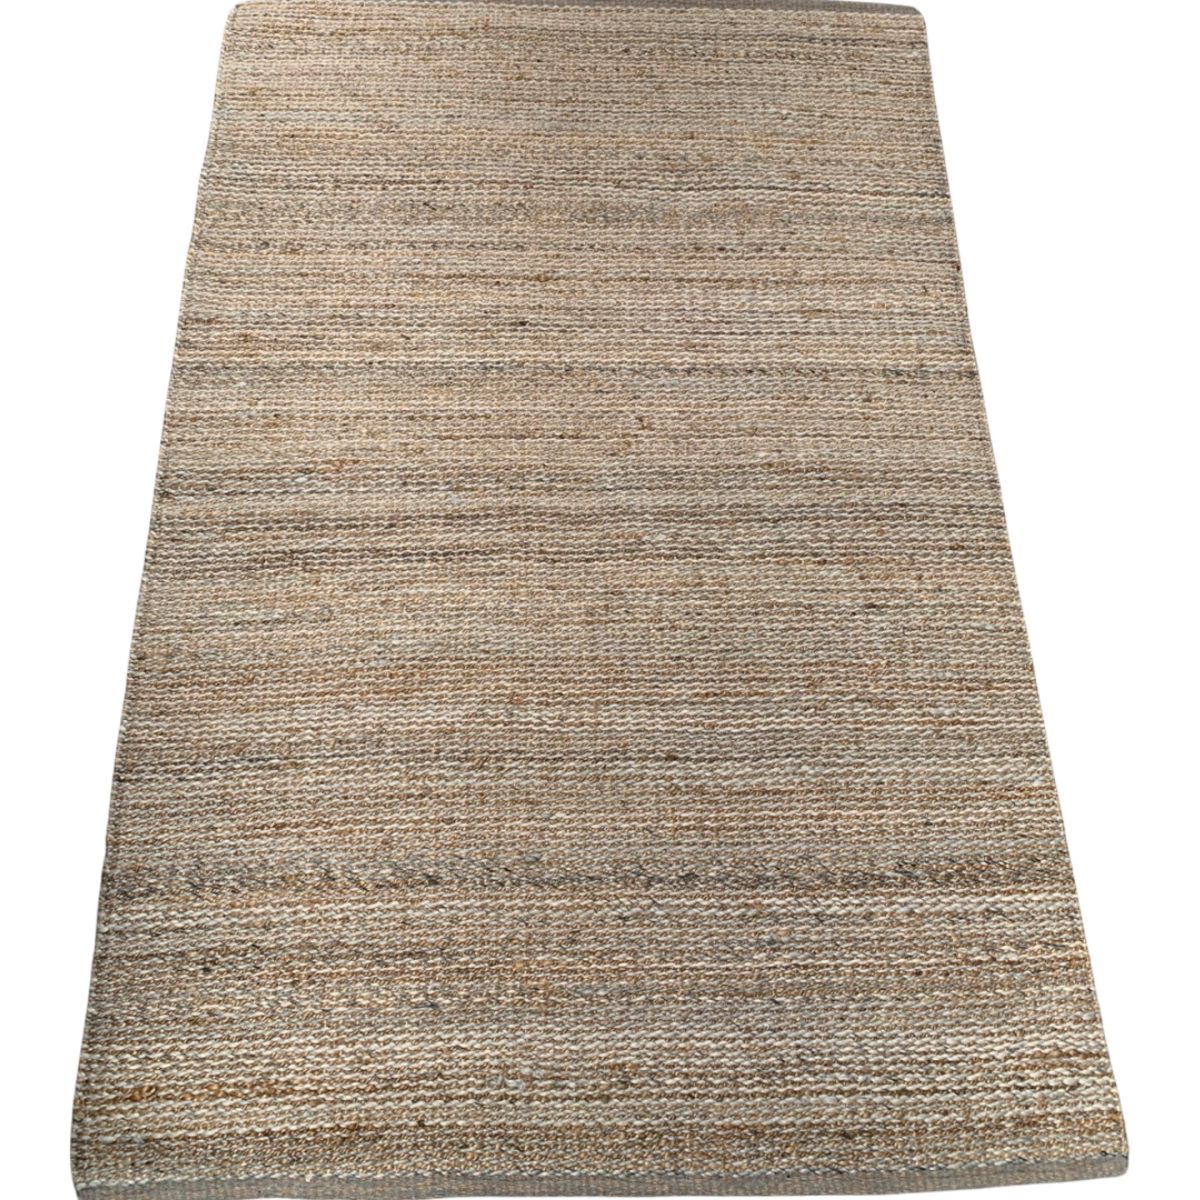 rug jute woven wool grey natural 160x230cm